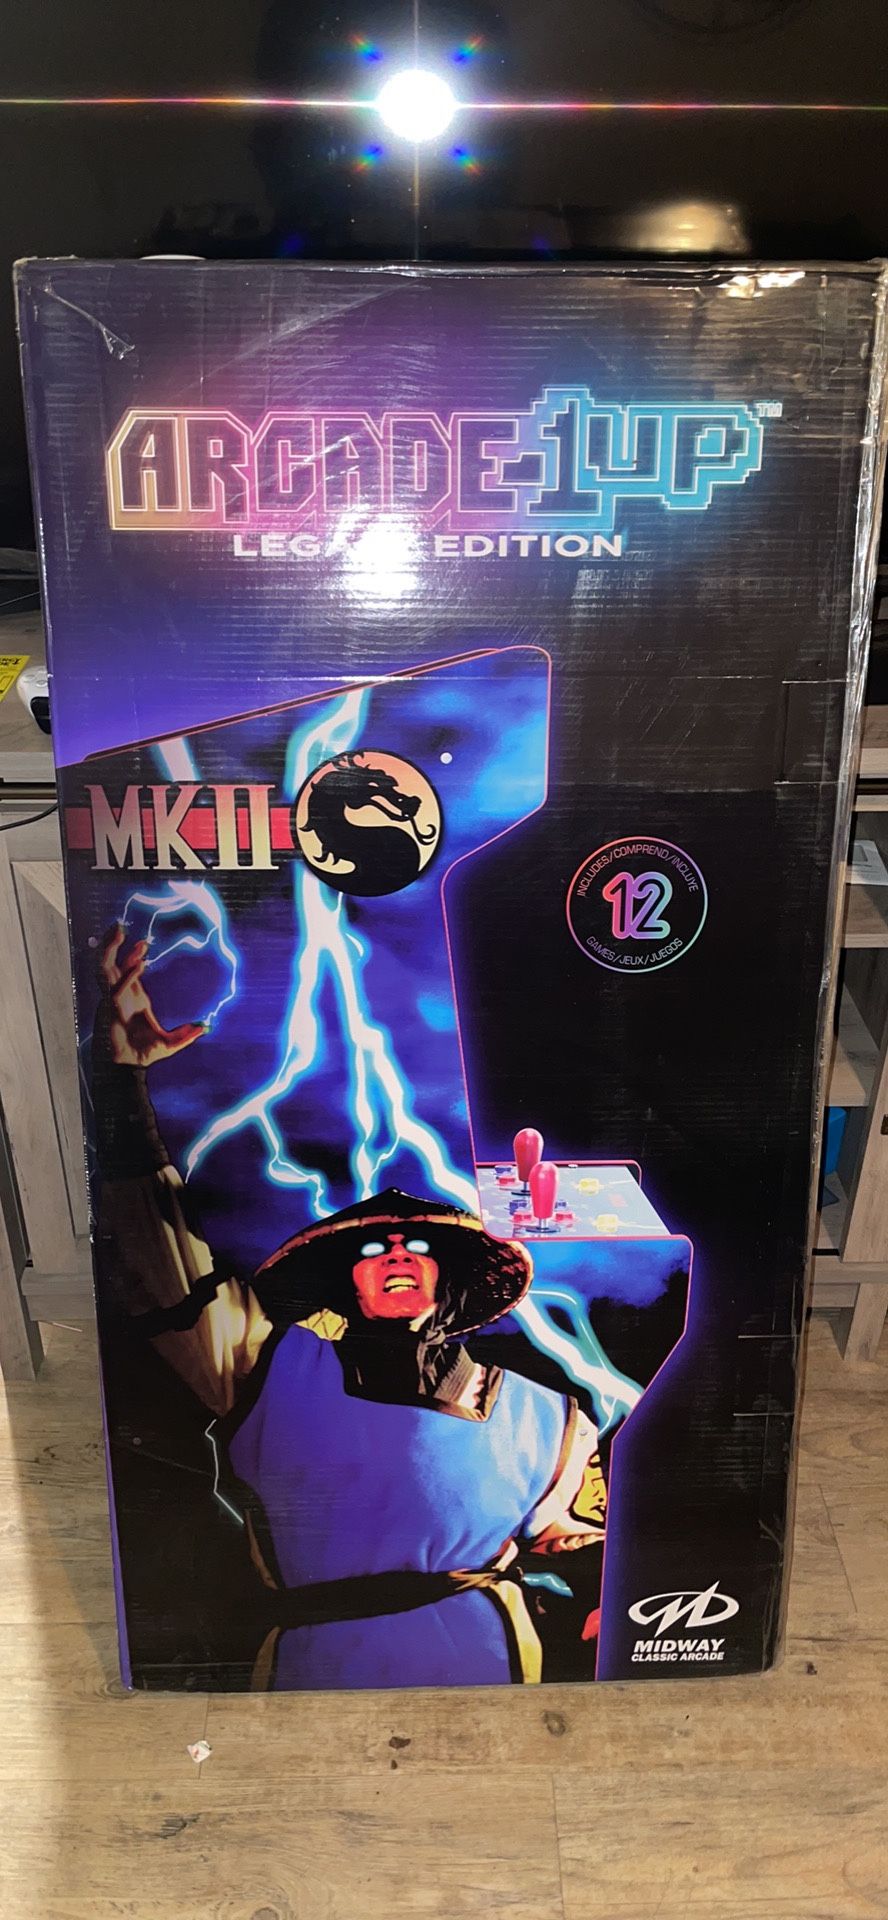 Mortal Kombat Arcade1UP Legacy Edition Arcade Machine 